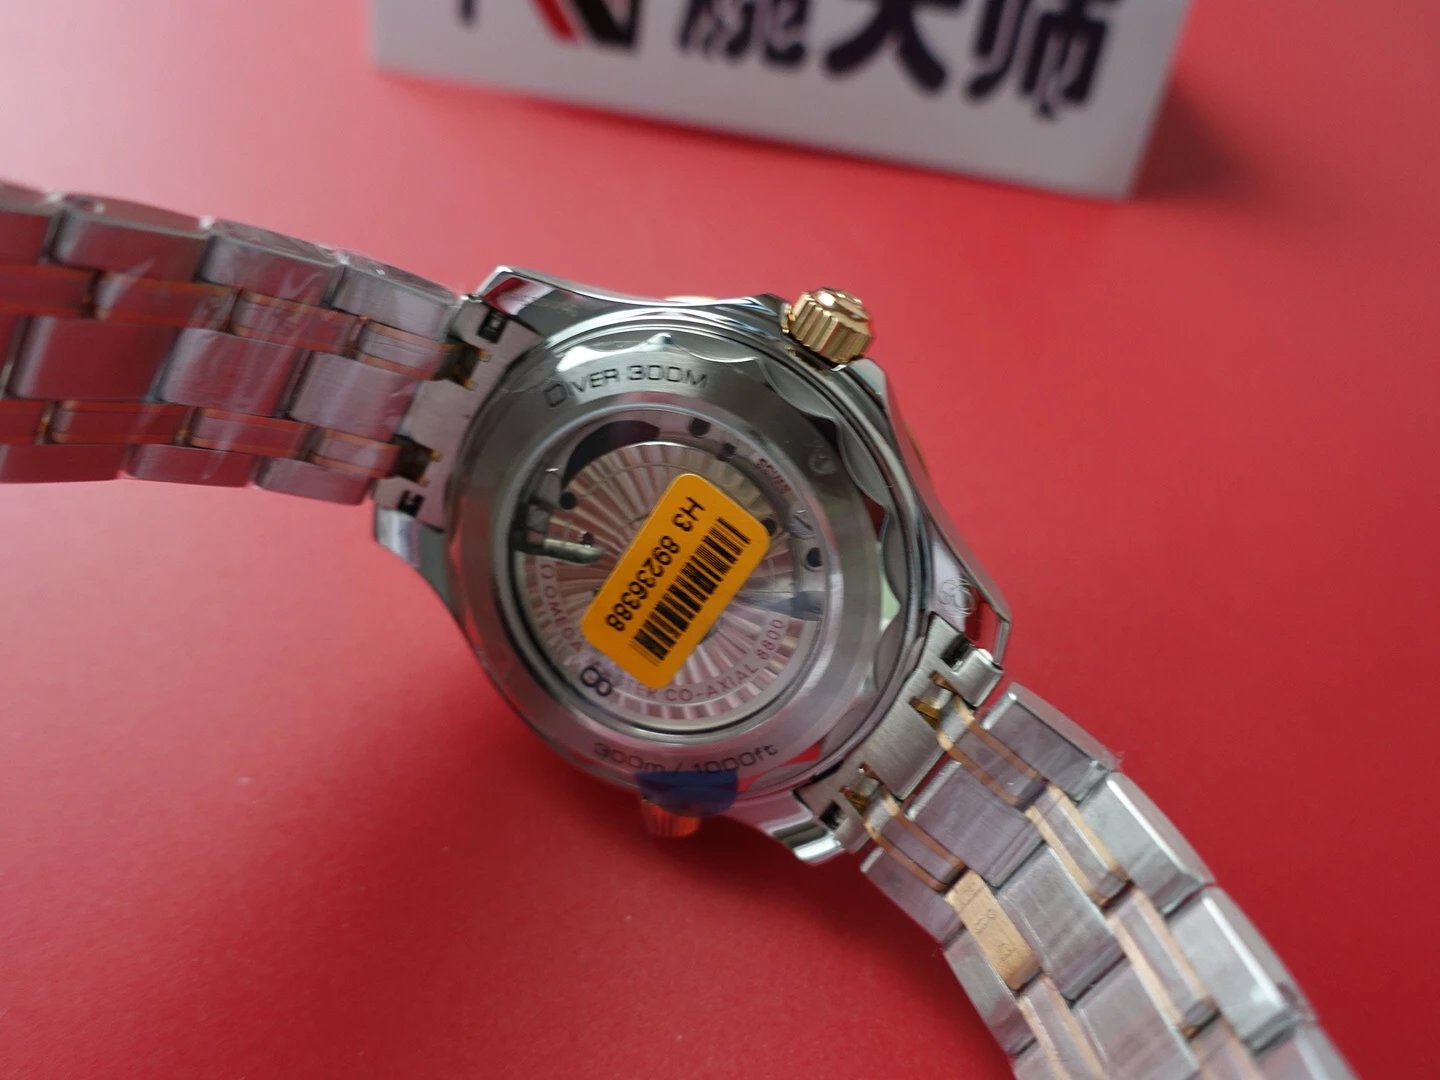 VS新品：新海马300M间玫金男士钢带机械手表。VS版本和正品在12点位外圈口带有贵金属印记表